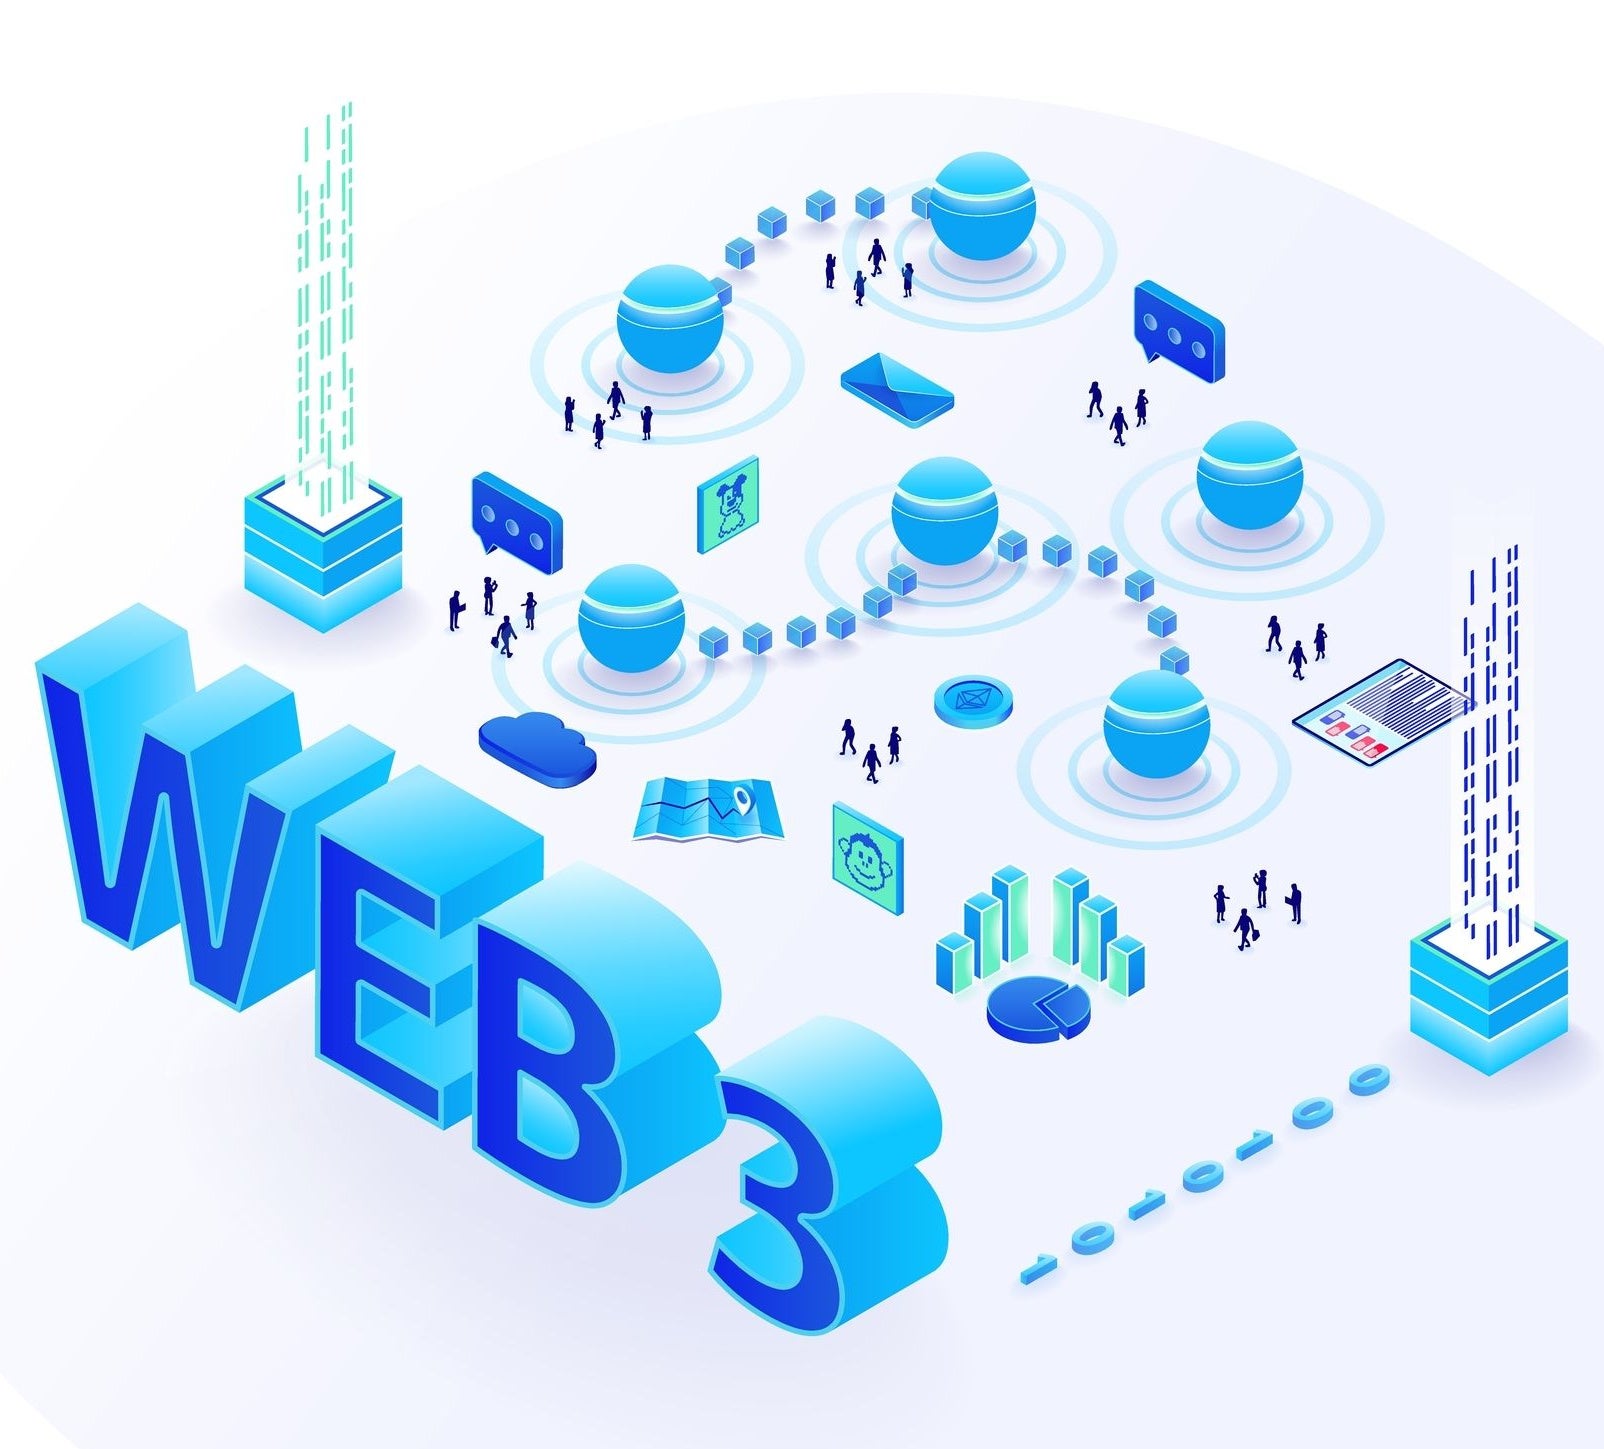 Web 3 technologies infographic 